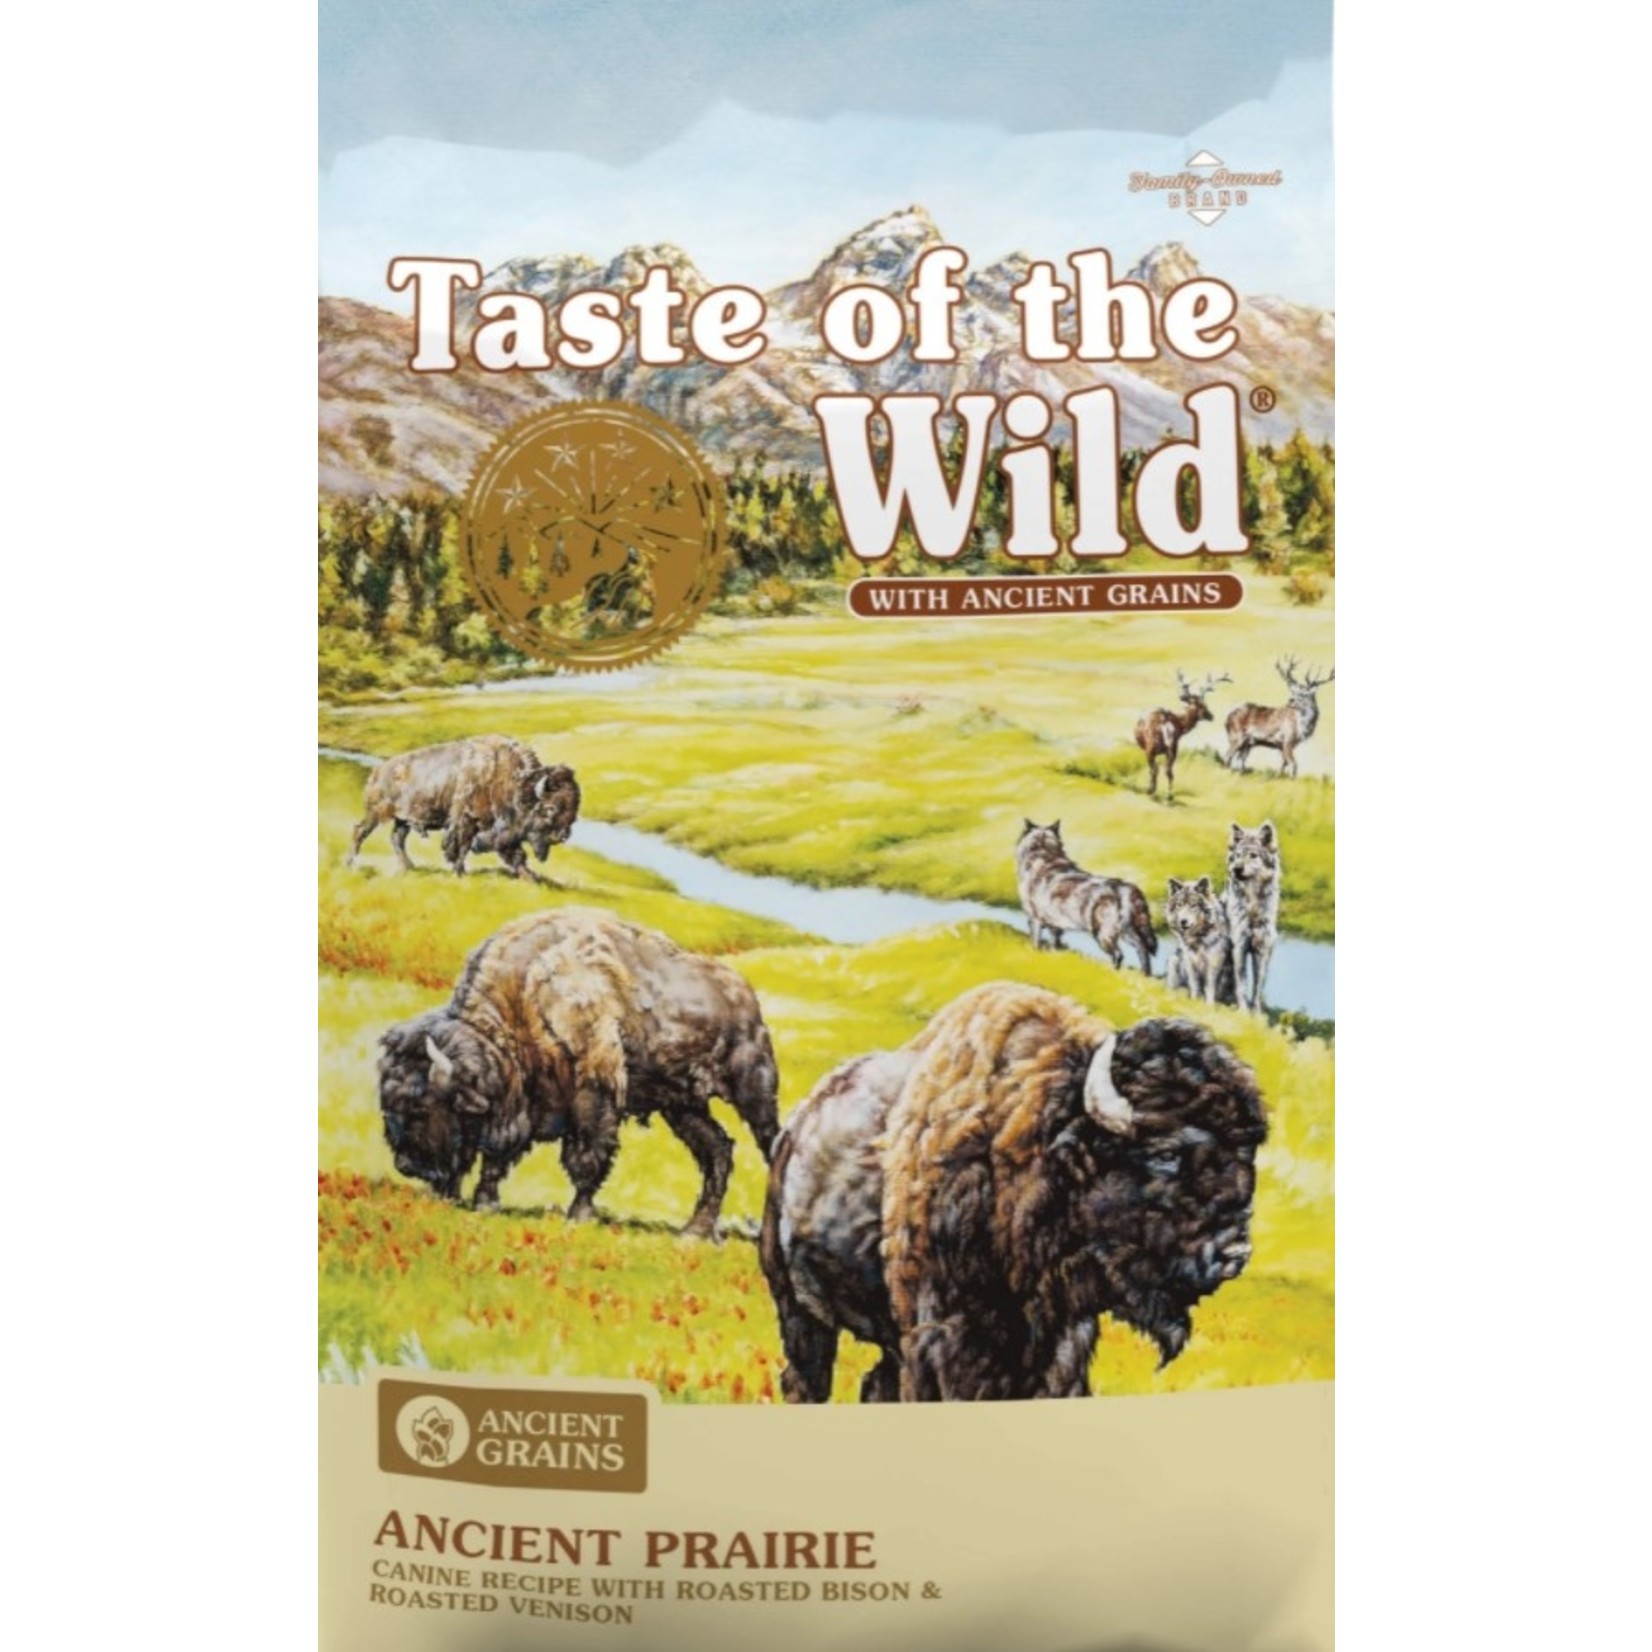 TOW TASTE OF THE WILD. Ancient Grains Ancient Prairie 5LB